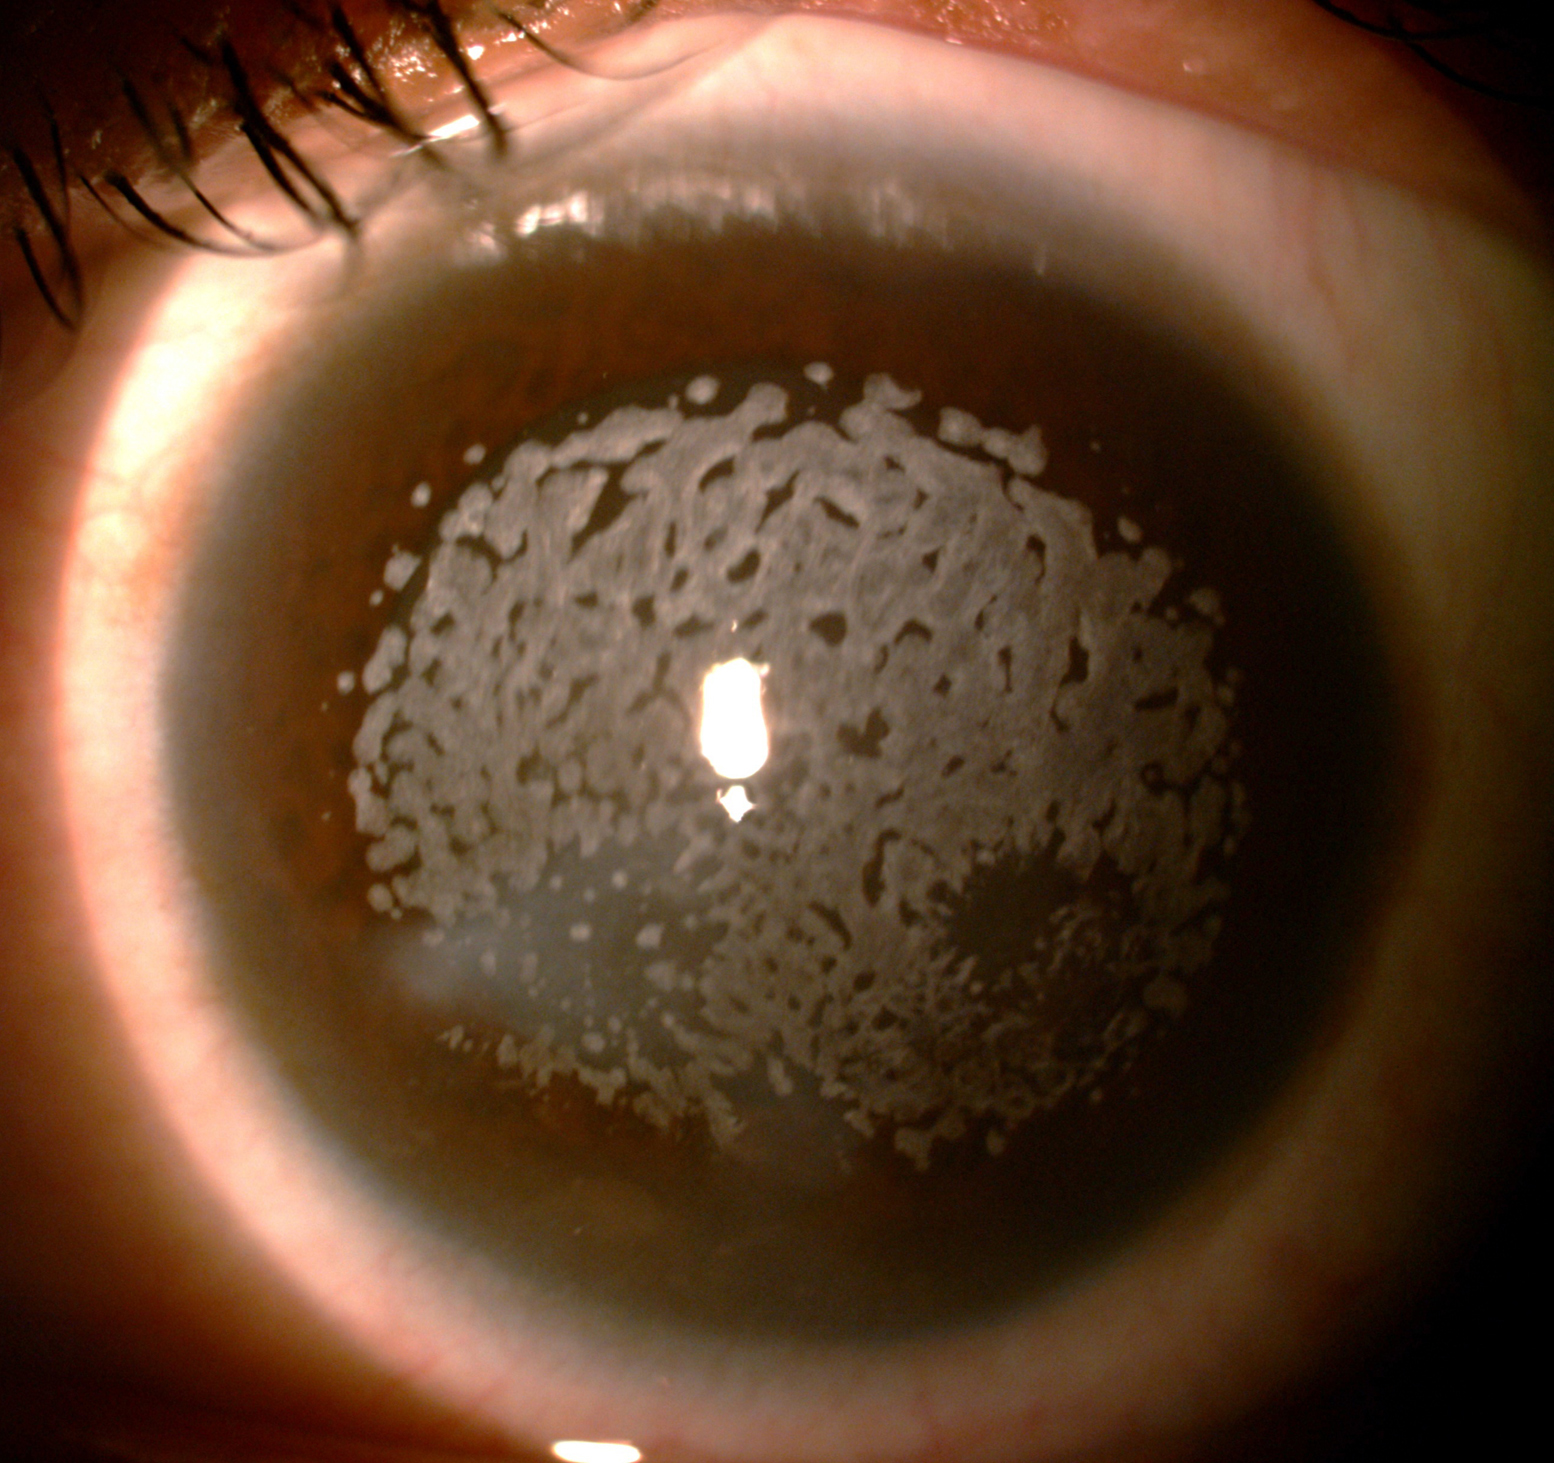 Anterior stromal granular corneal dystrophy.